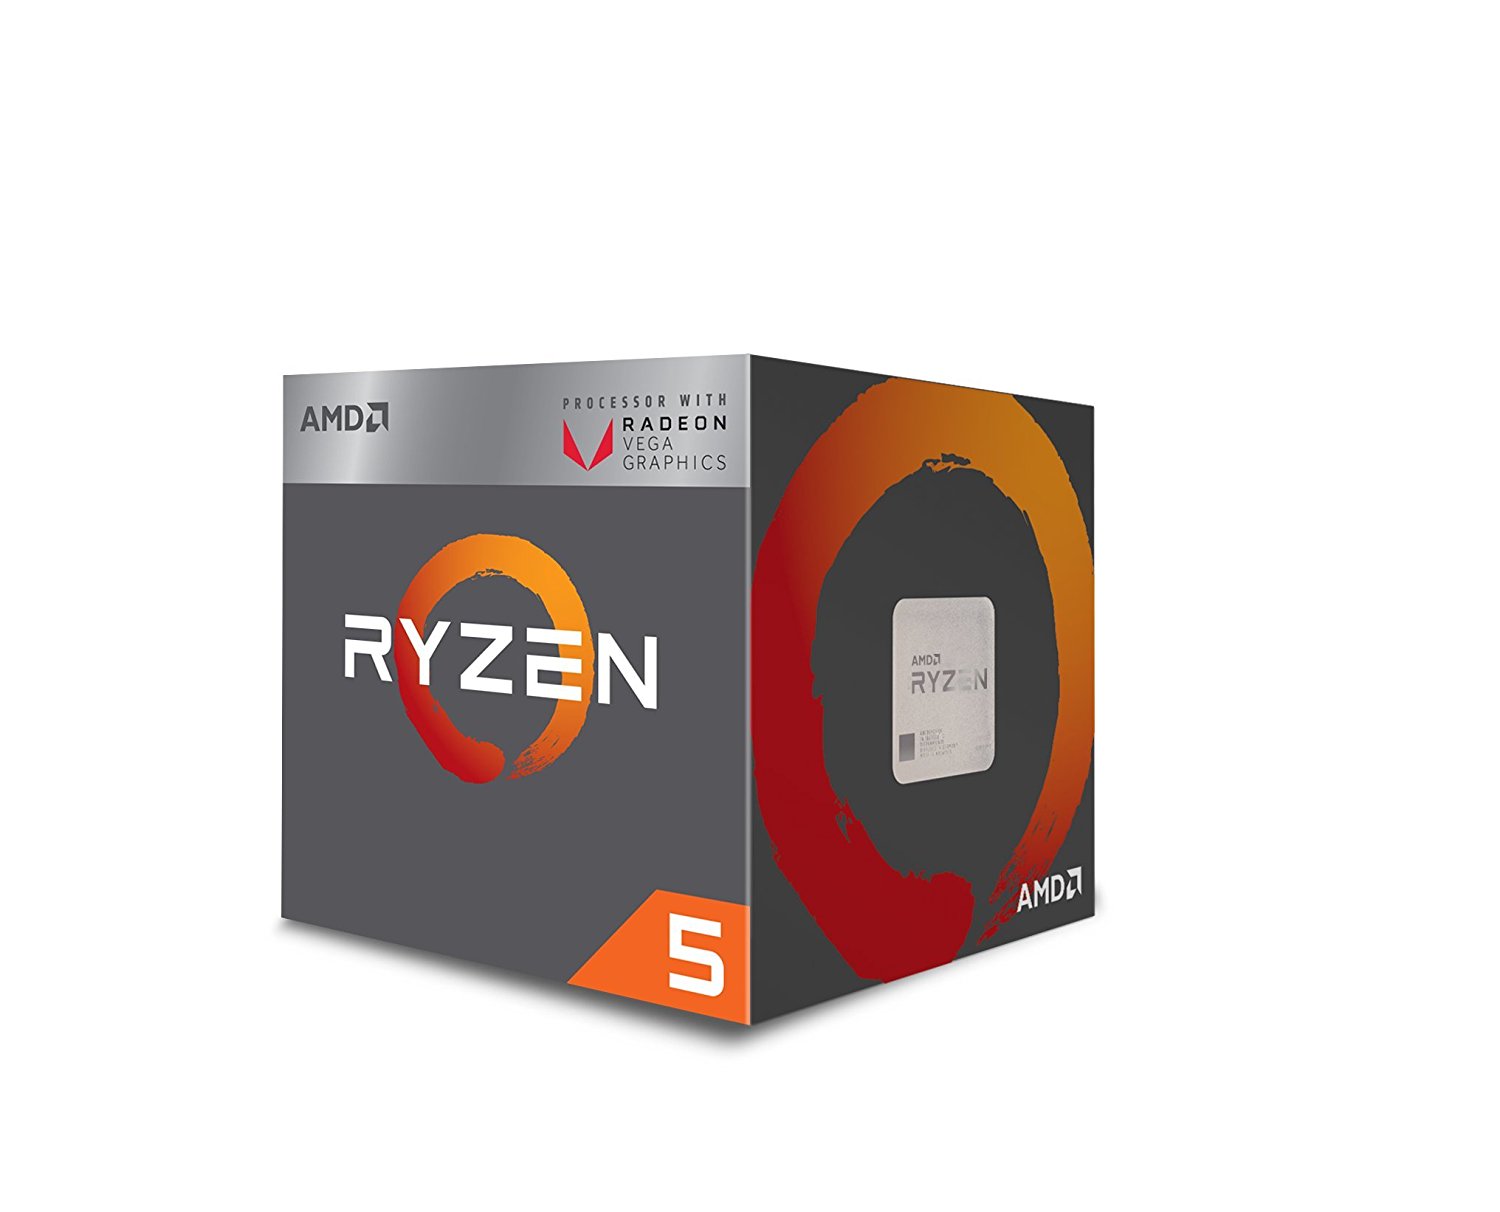 Media asset in full size related to 3dfxzone.it news item entitled as follows: AMD lancia le APU Raven Ridge per desktop Ryzen 5 2400G e Ryzen 3 2200G | Image Name: news27852_Ryzen-5-2400G-Ryzen-3-2200G_5.jpg